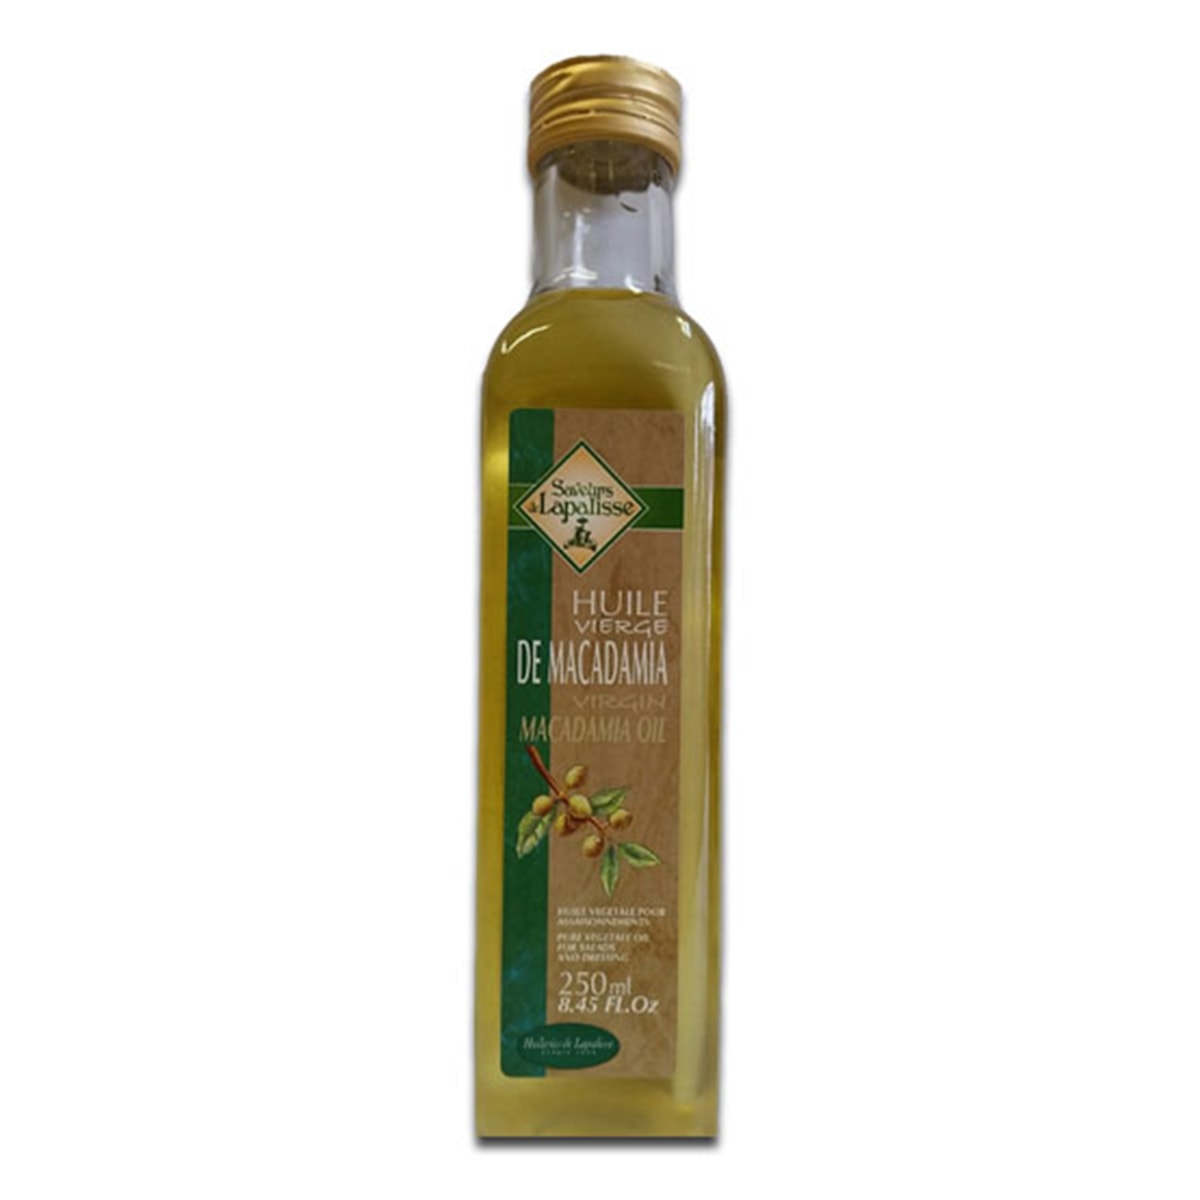 Buy Saveurs De Lapalisse Huile De Macadamia (100% Pure Macadamia Oil) - 250 ml